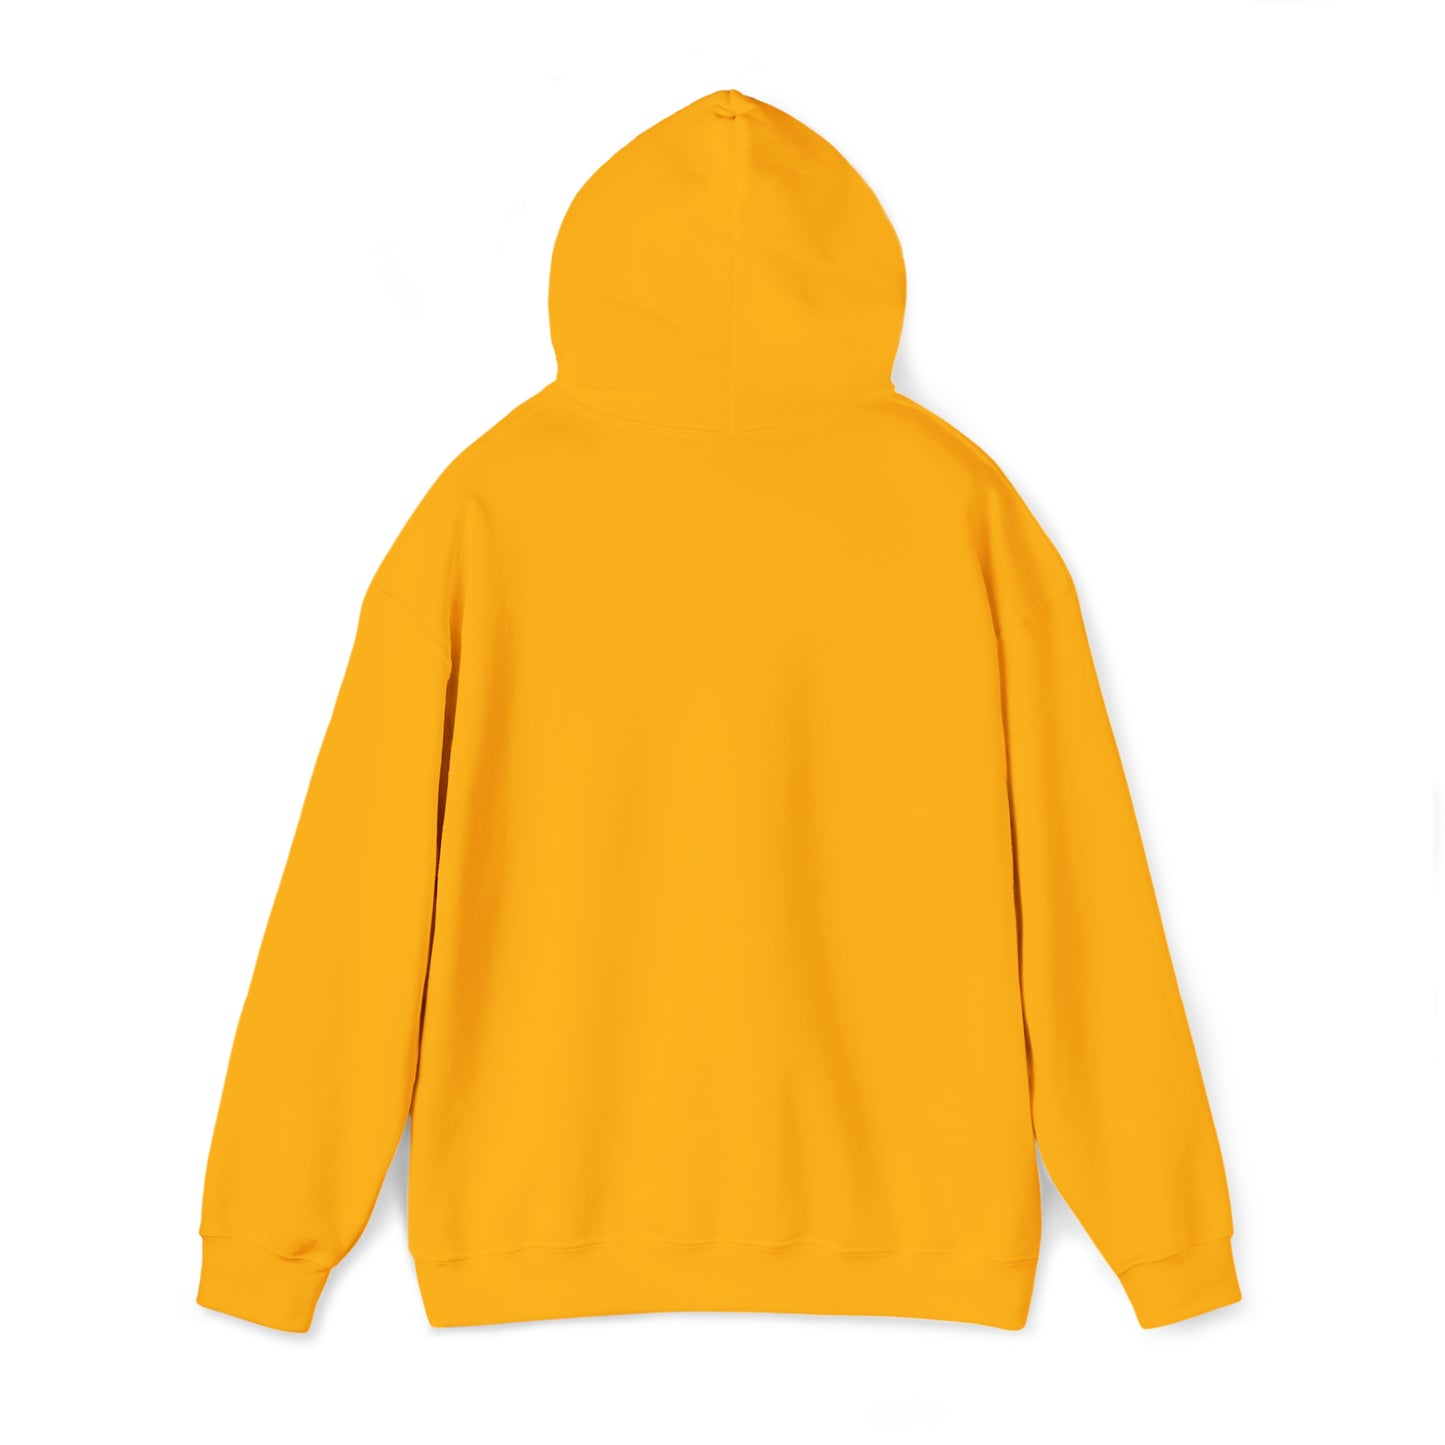 CAR-T For The Win! Unisex Heavy Blend™ Hooded Sweatshirt